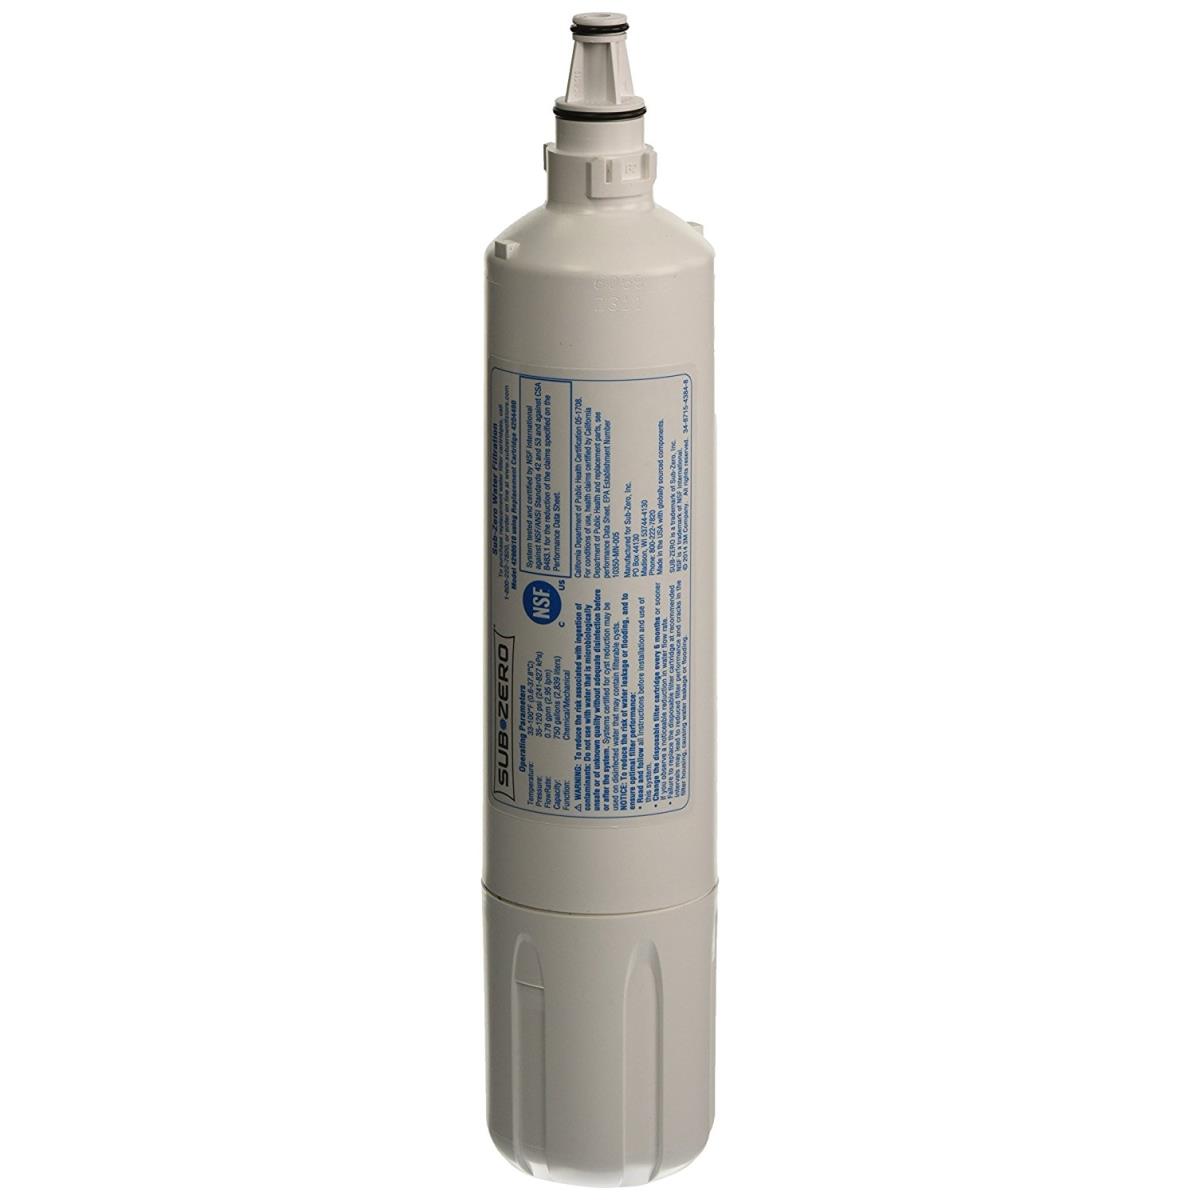 SUBZERO-4204490 Refrigerator Water Filter for Sub-Zero -  Commercial Water Distributing